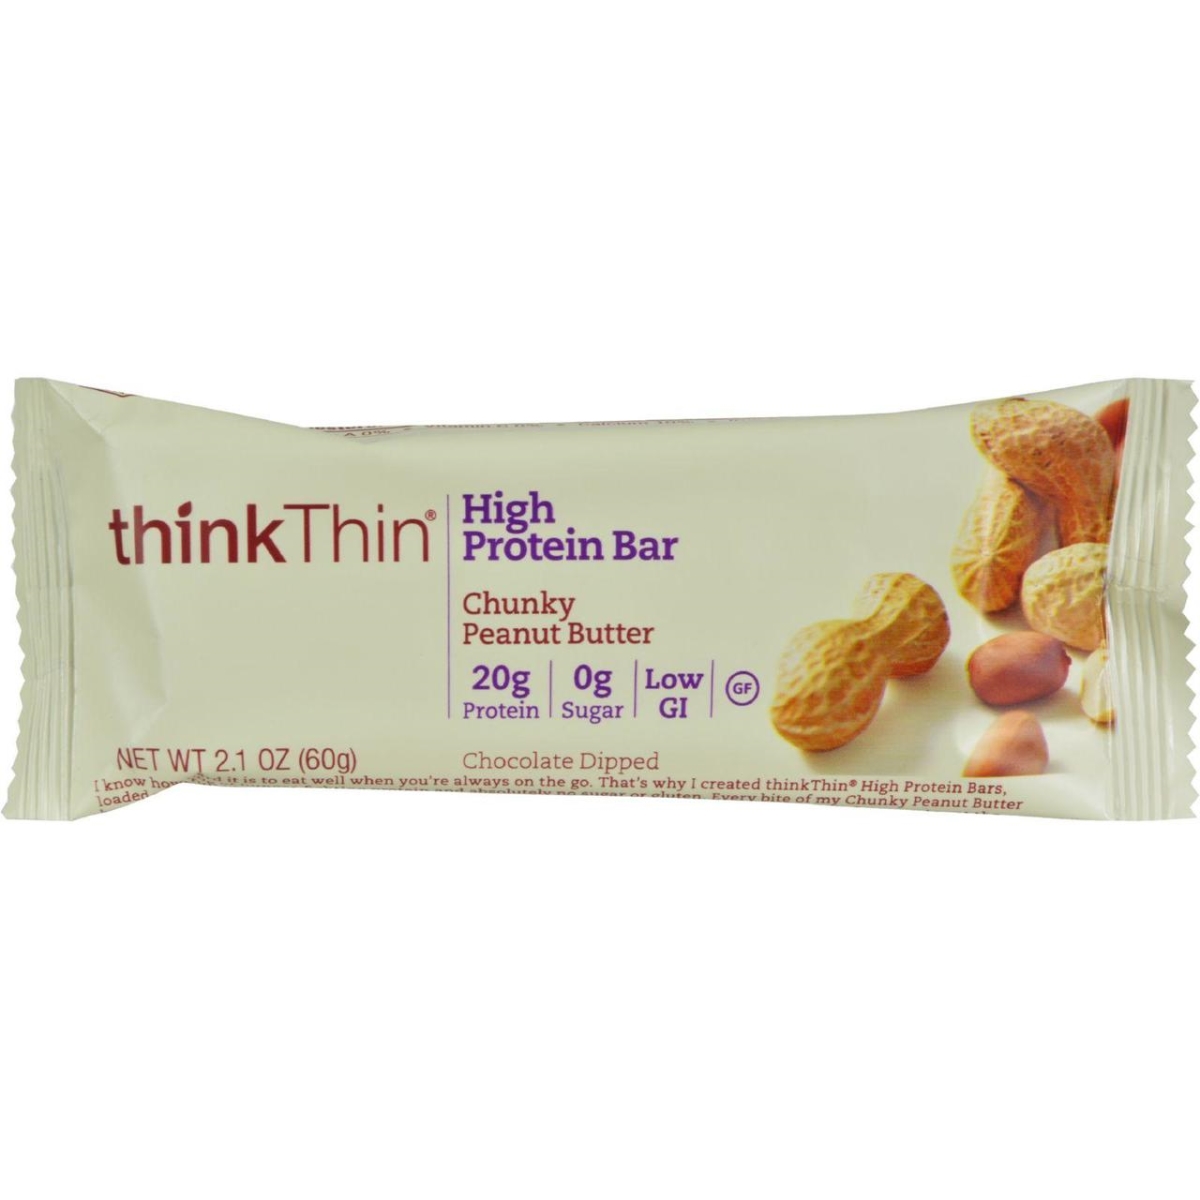 Hg0269878 2.1 Oz Thin Bar, Chunky Peanut Butter - Case Of 10